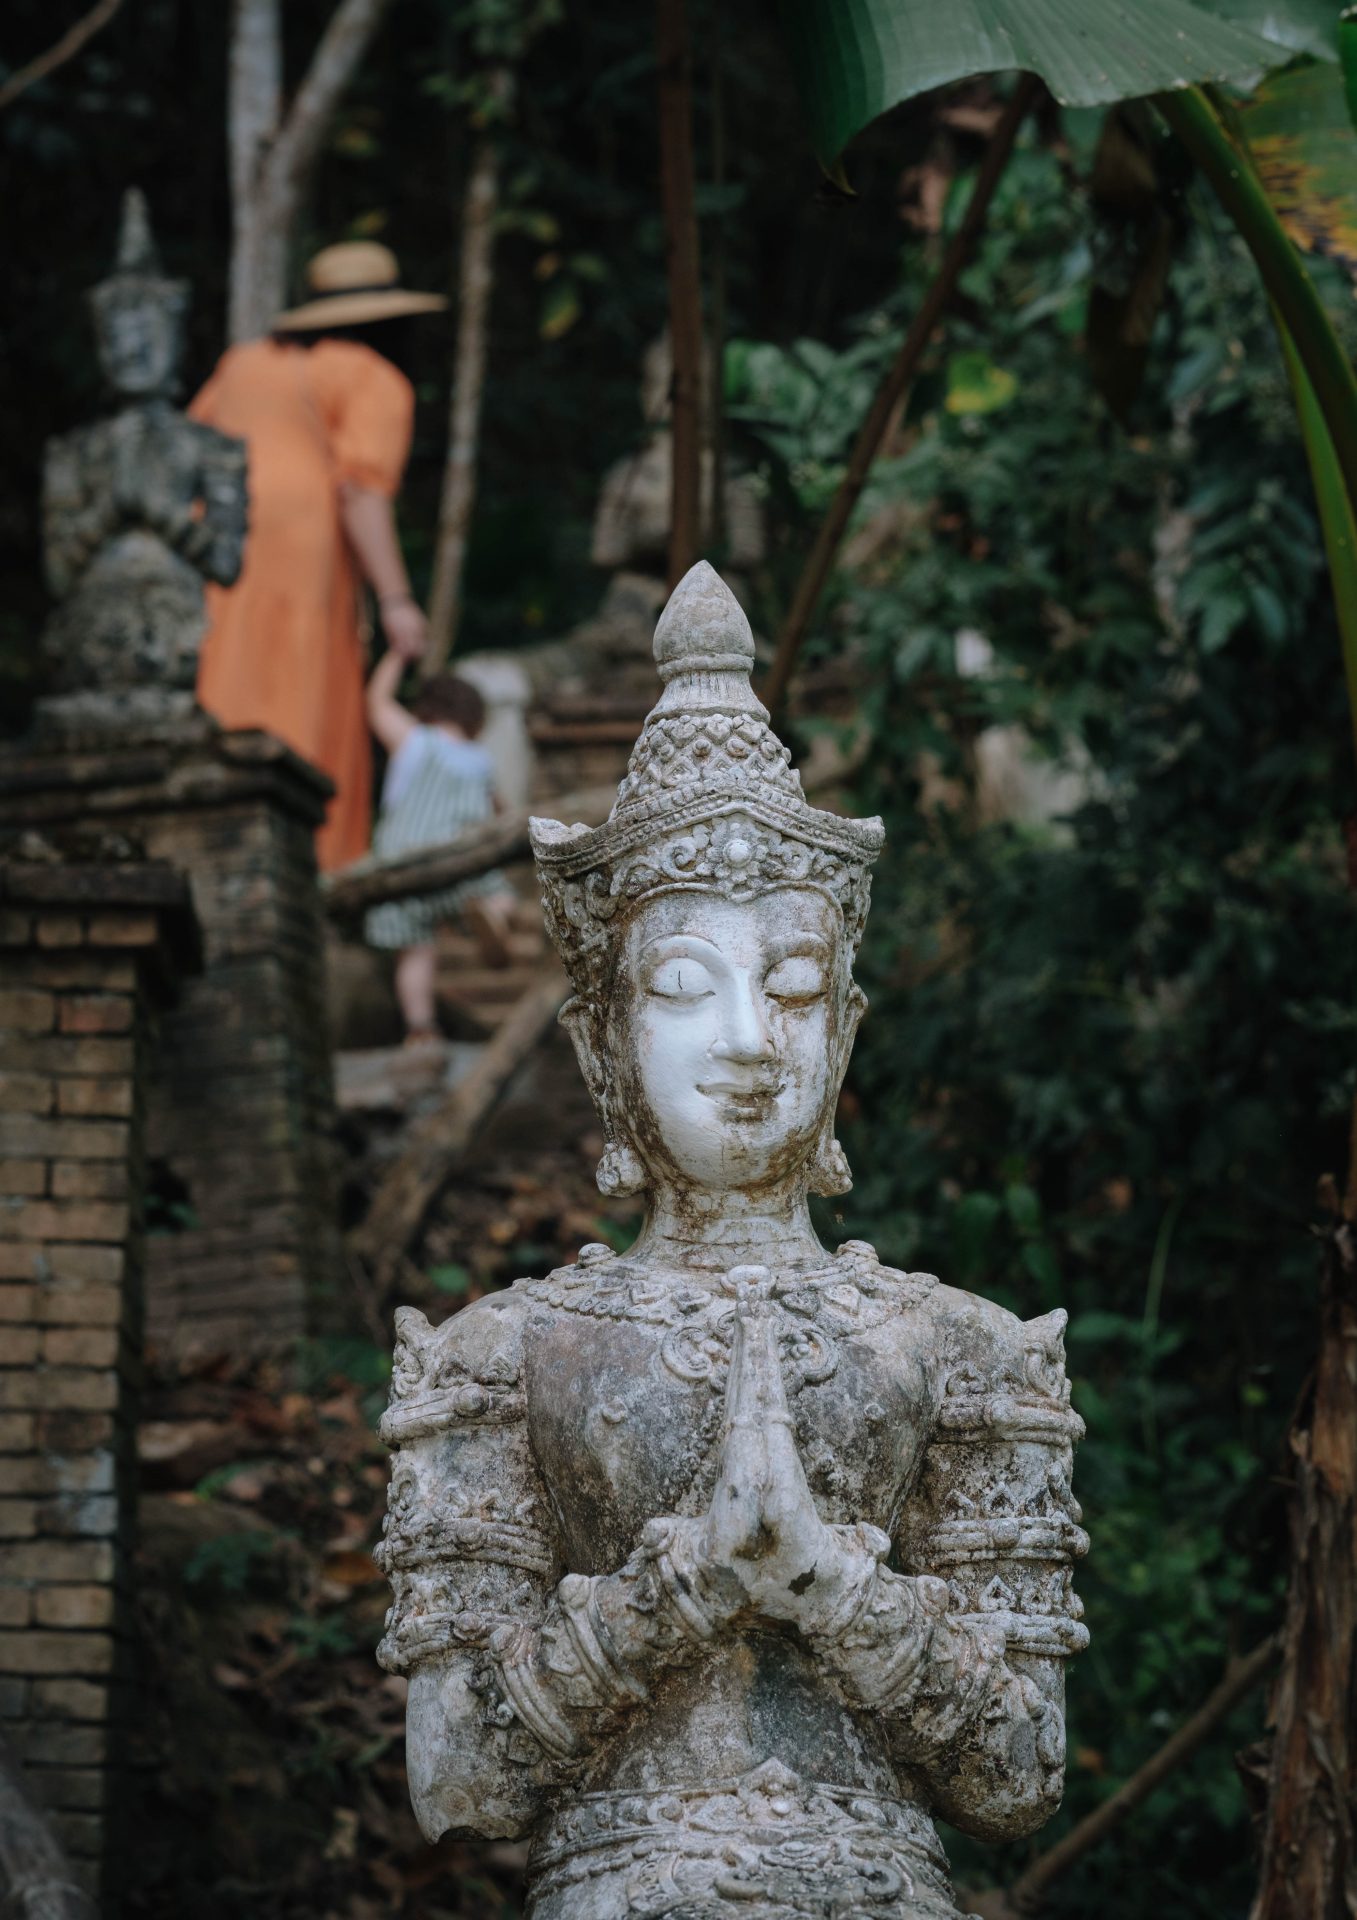 blog voyage thailande du nord